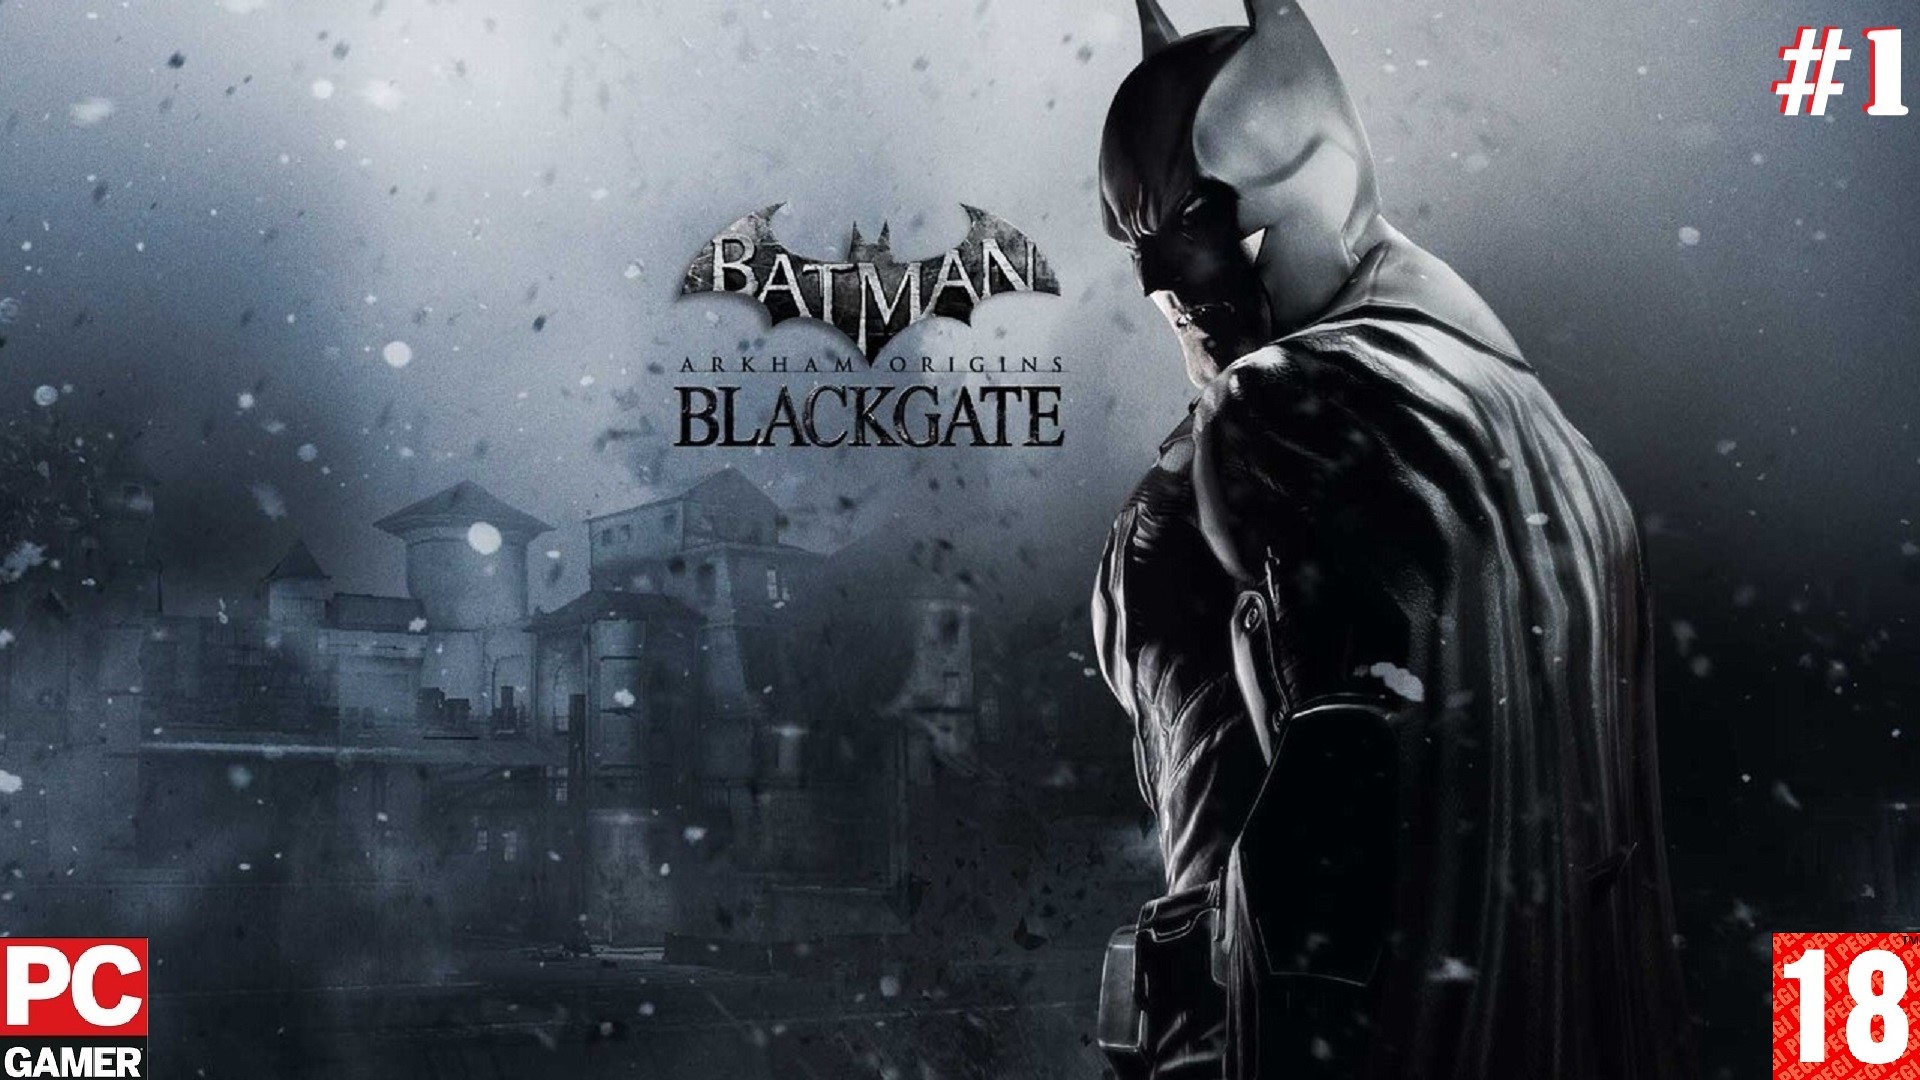 Аркхем оригинс. Бэтмен Аркхем ориджинс. Batman Arkham Origins Бэтмен. Batman: Arkham Origins Blackgate. Бэтмен Блэкгейт.